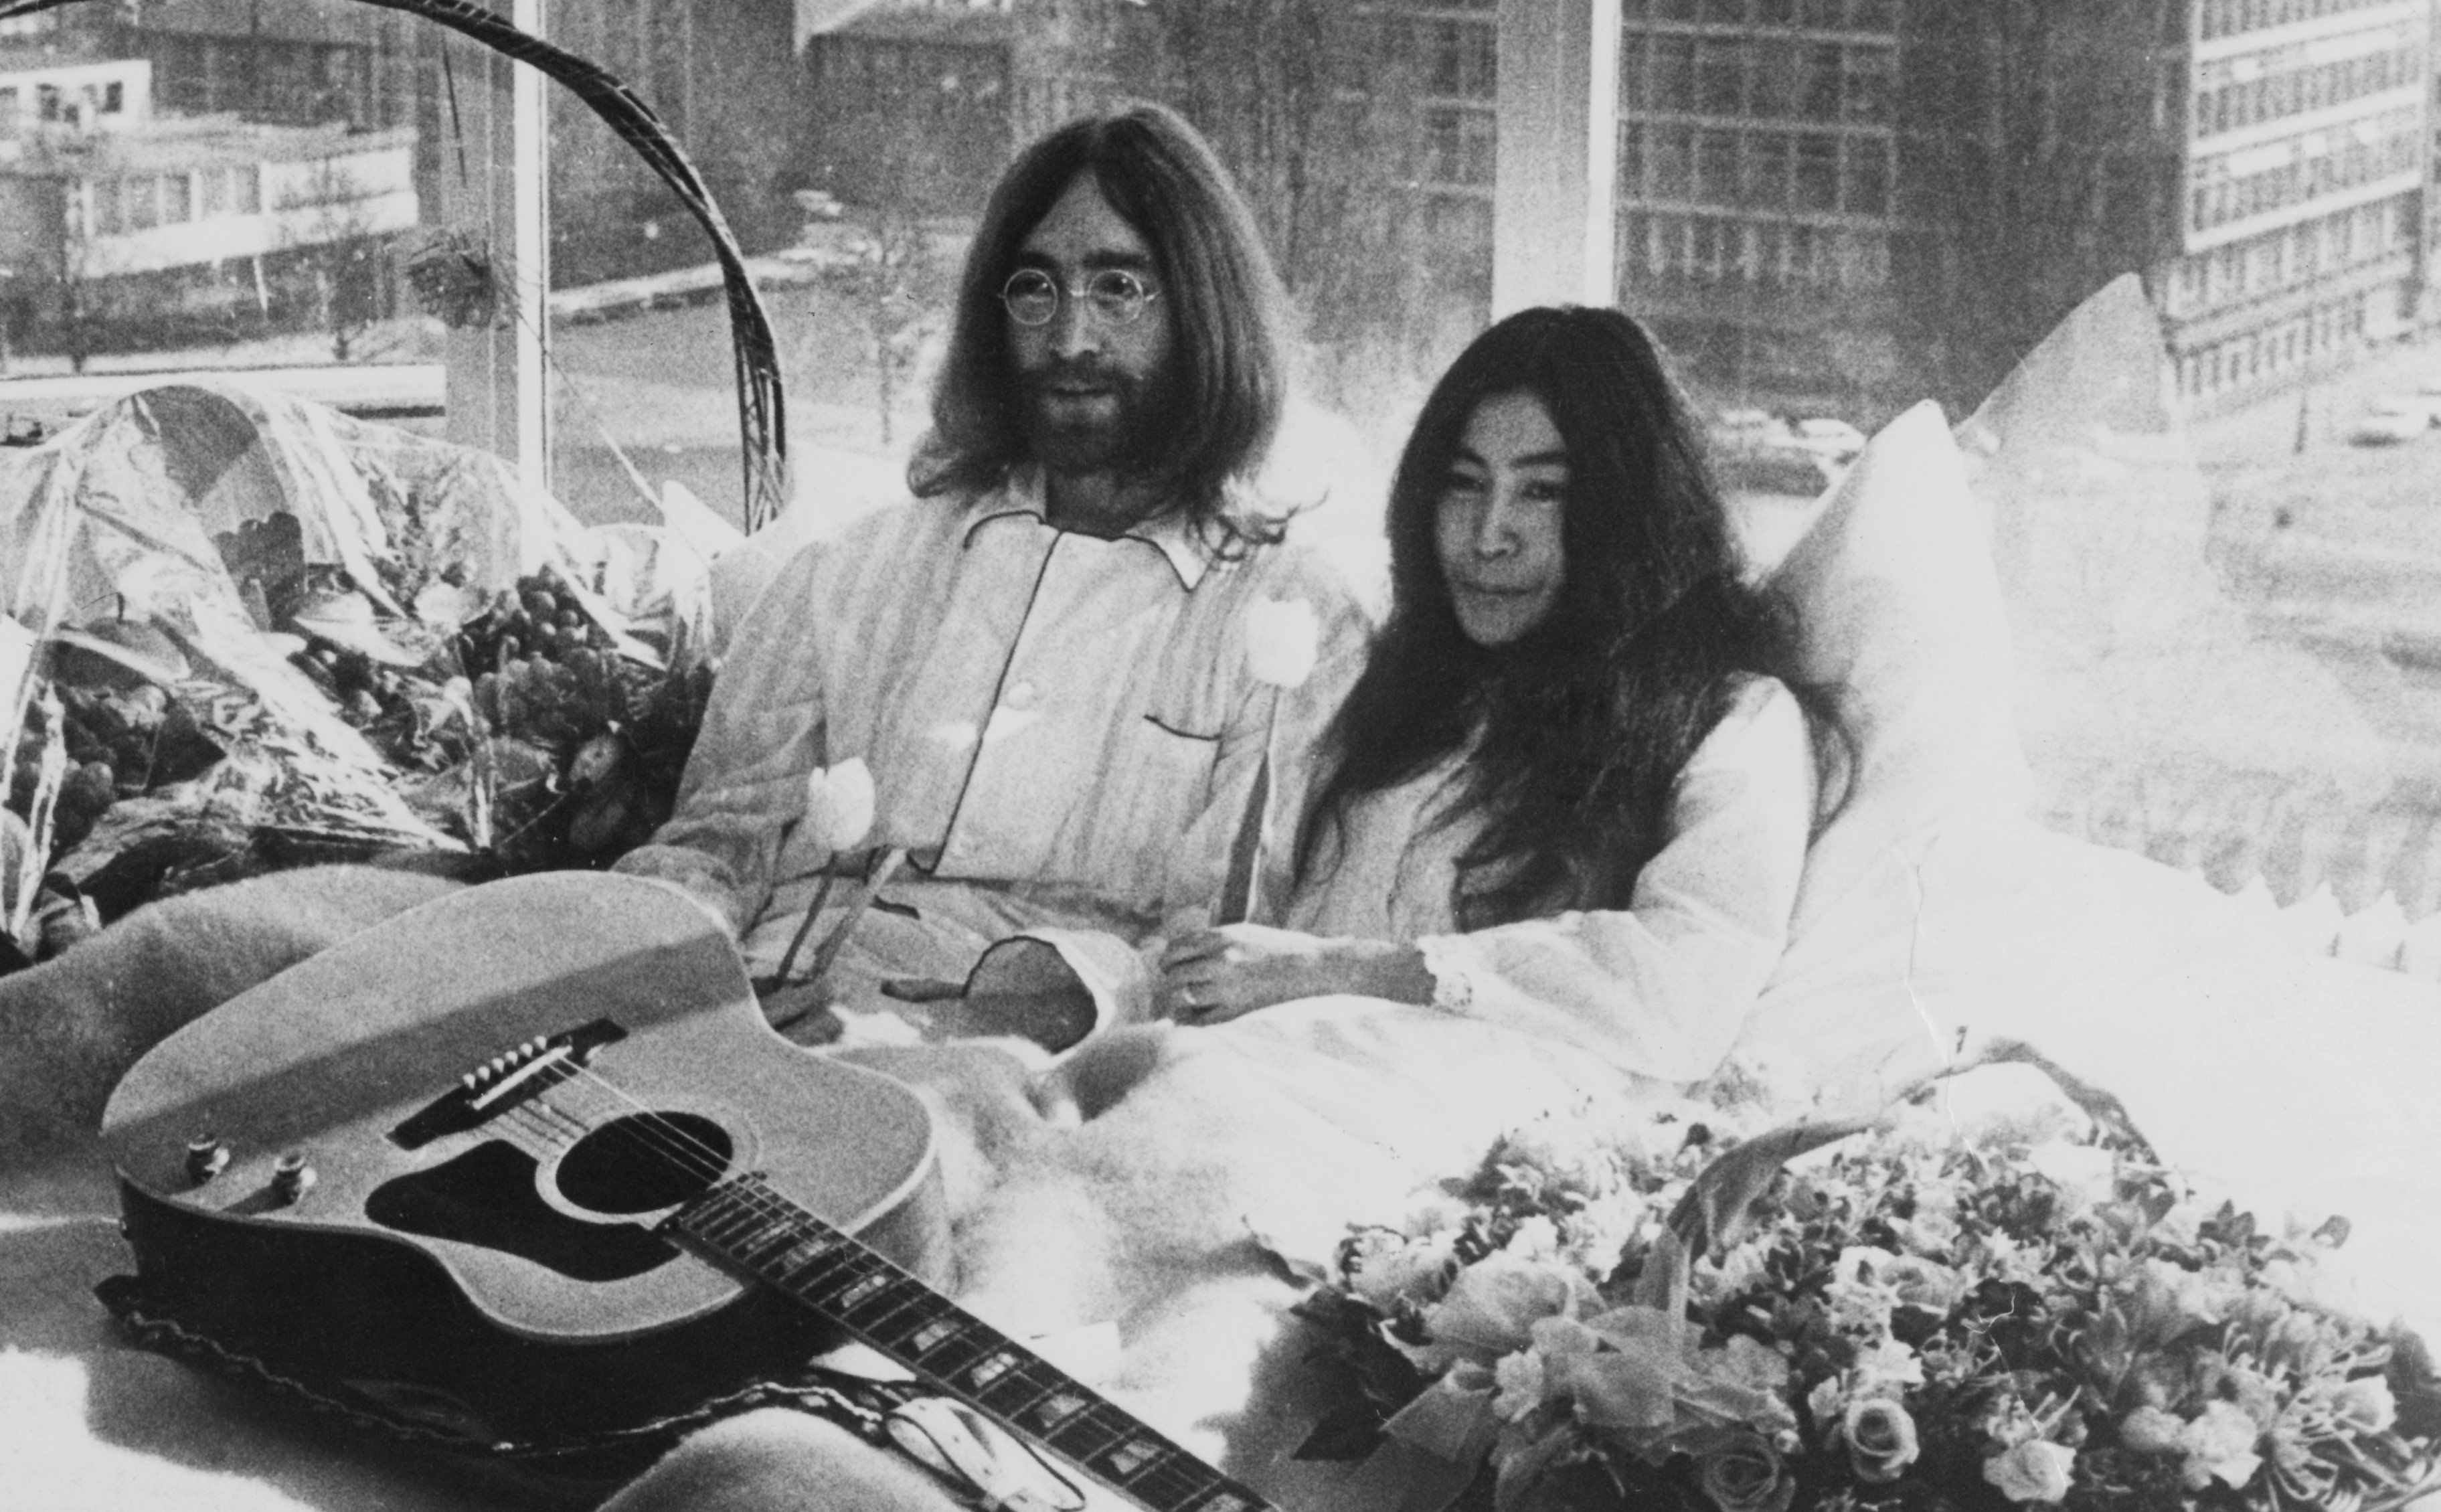 The Beatles' John Lennon with Yoko Ono and a guitar